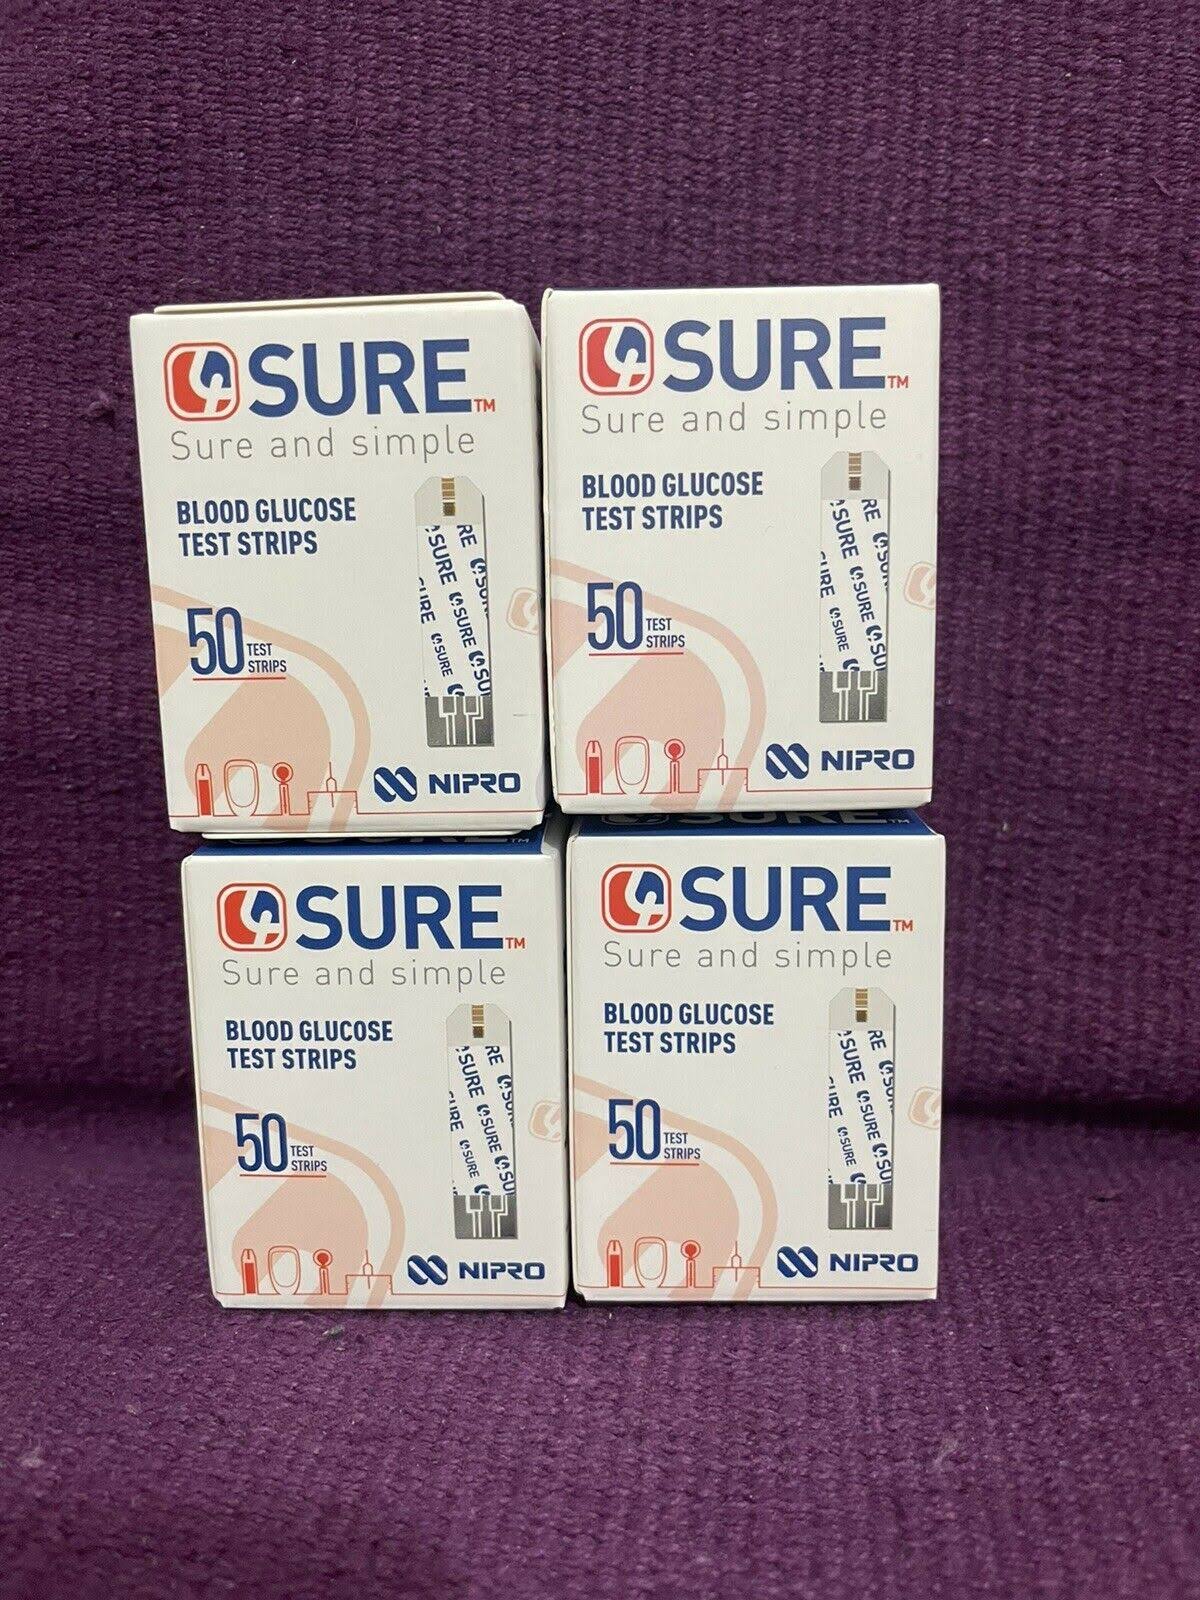 4Sure Blood Glucose Test Strips 50